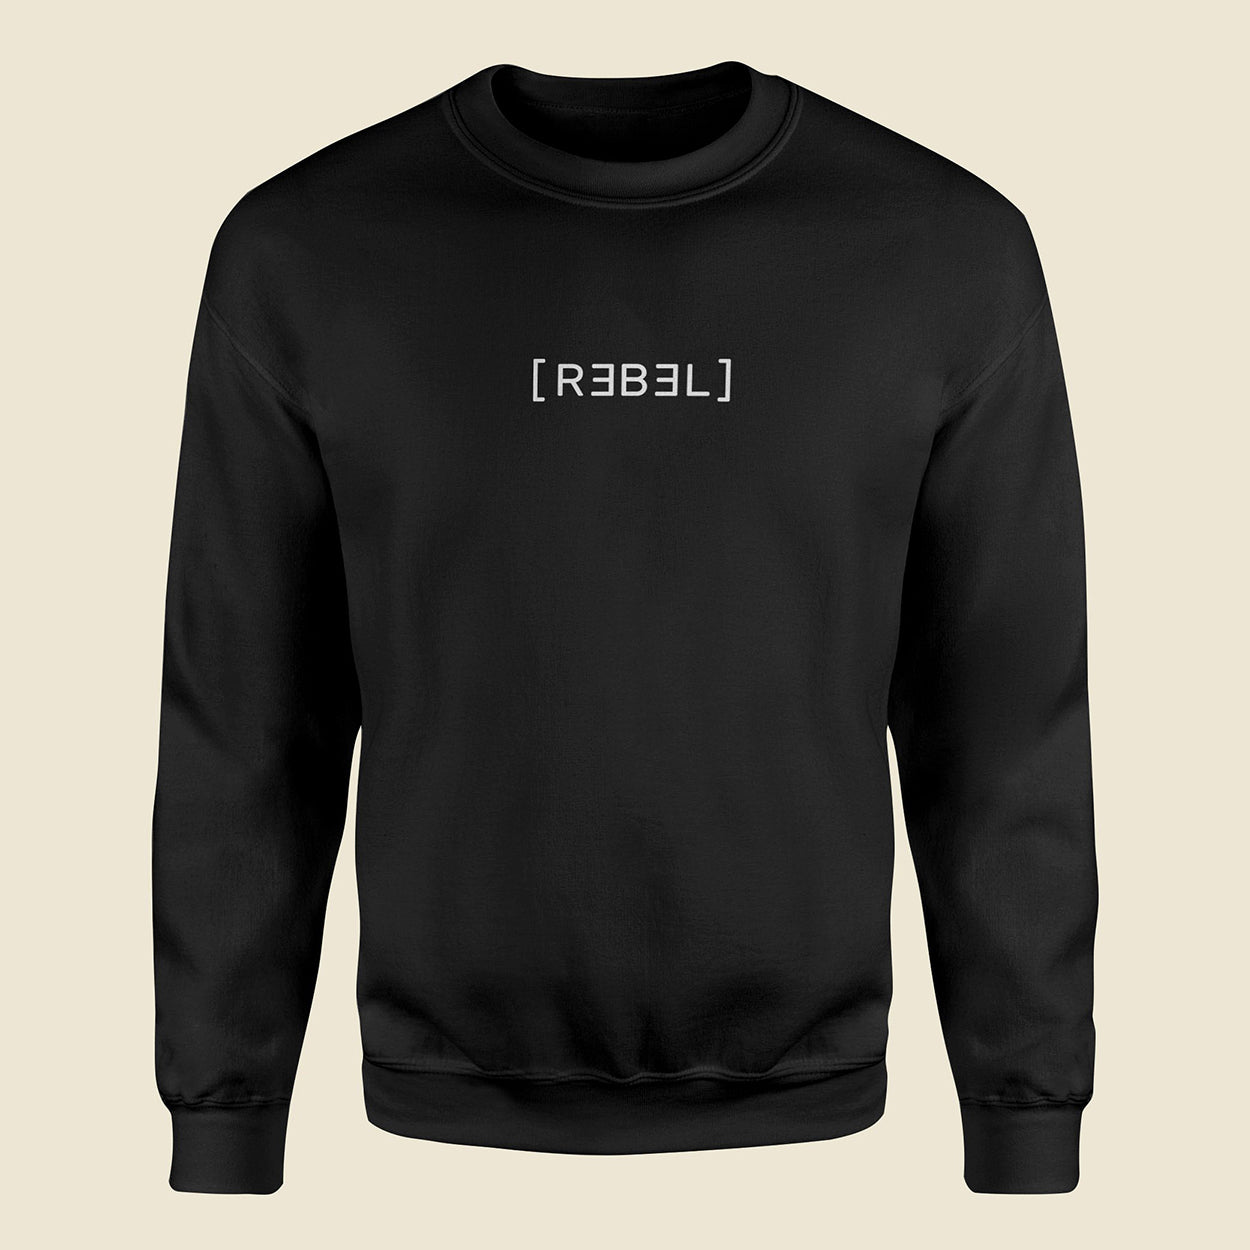 [Rebel] Black Sweatshirt